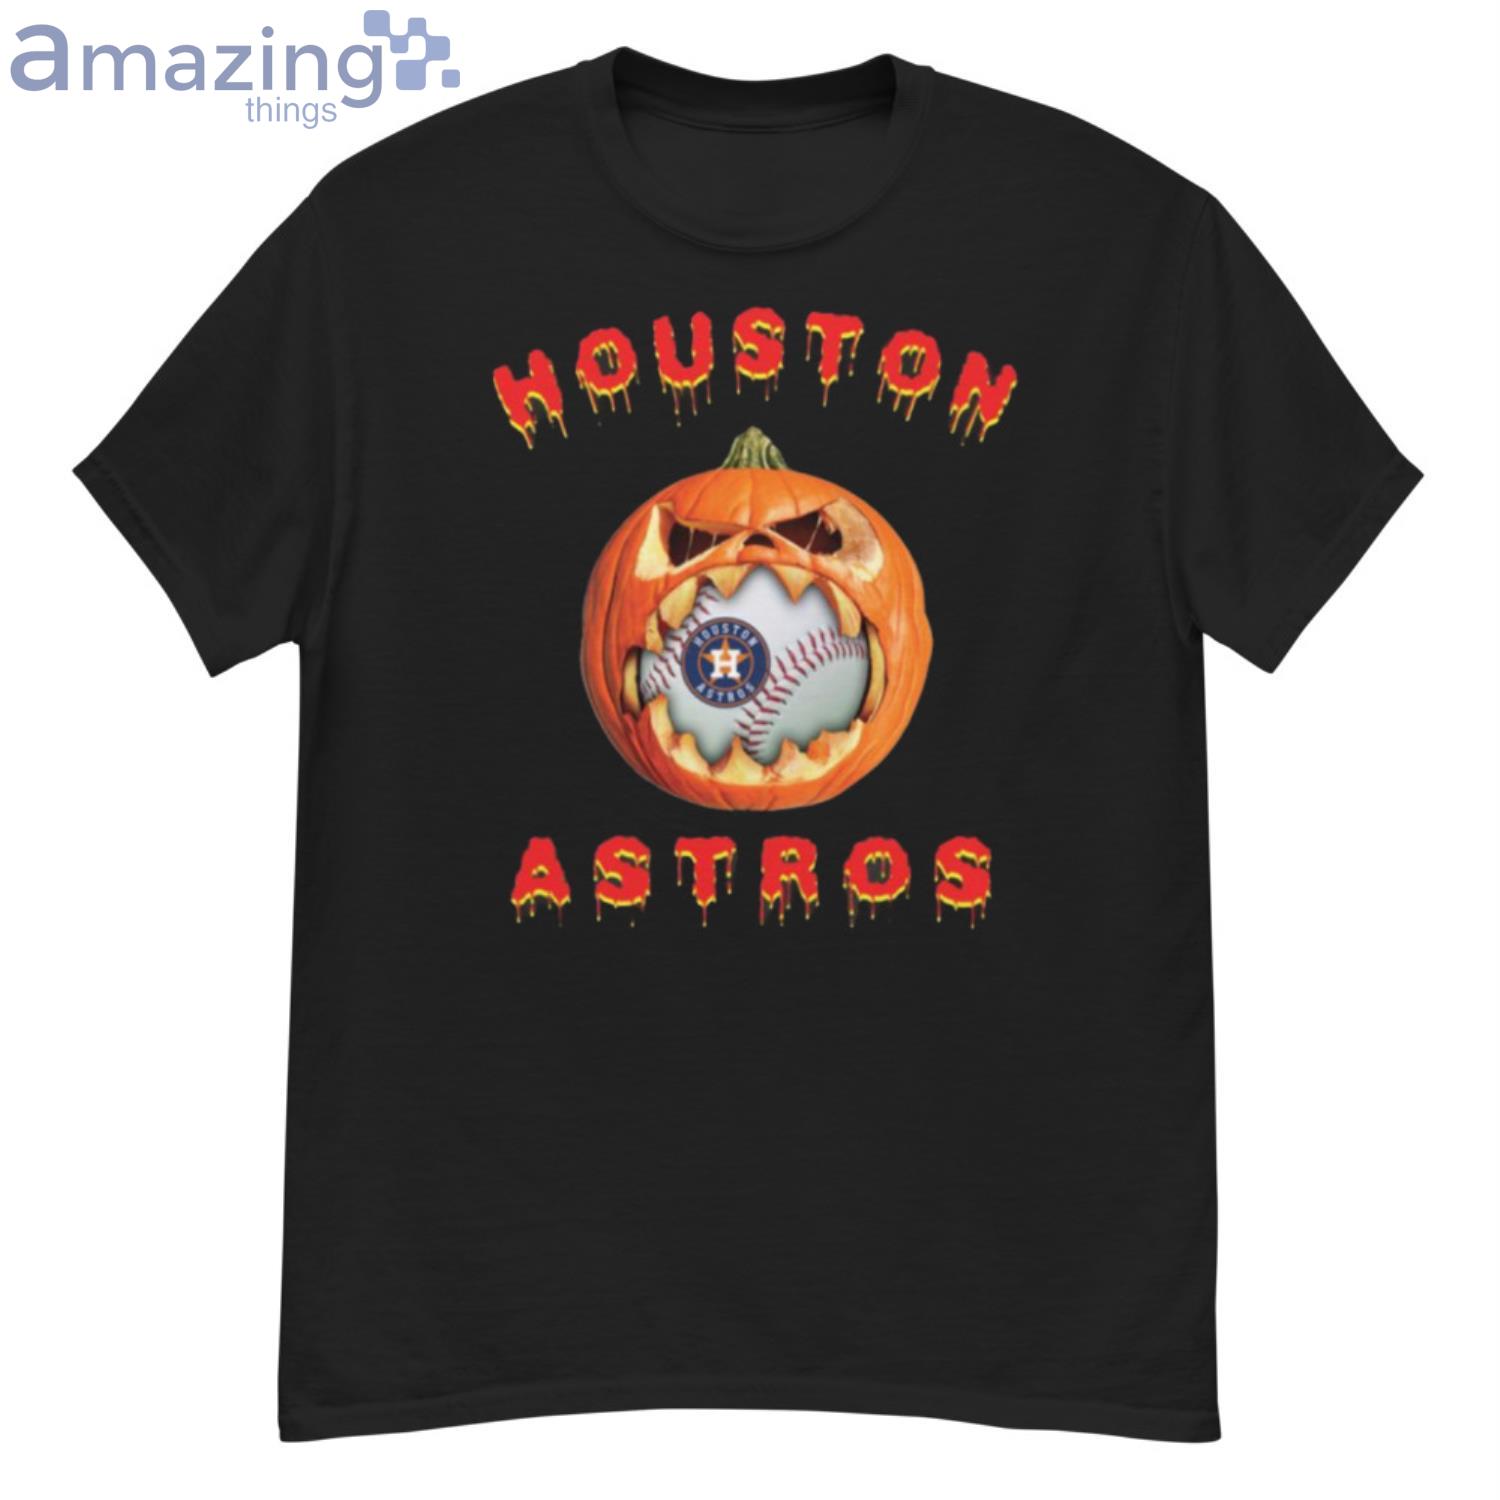 MLB Houston Astros Boys' Long Sleeve T-Shirt - XS